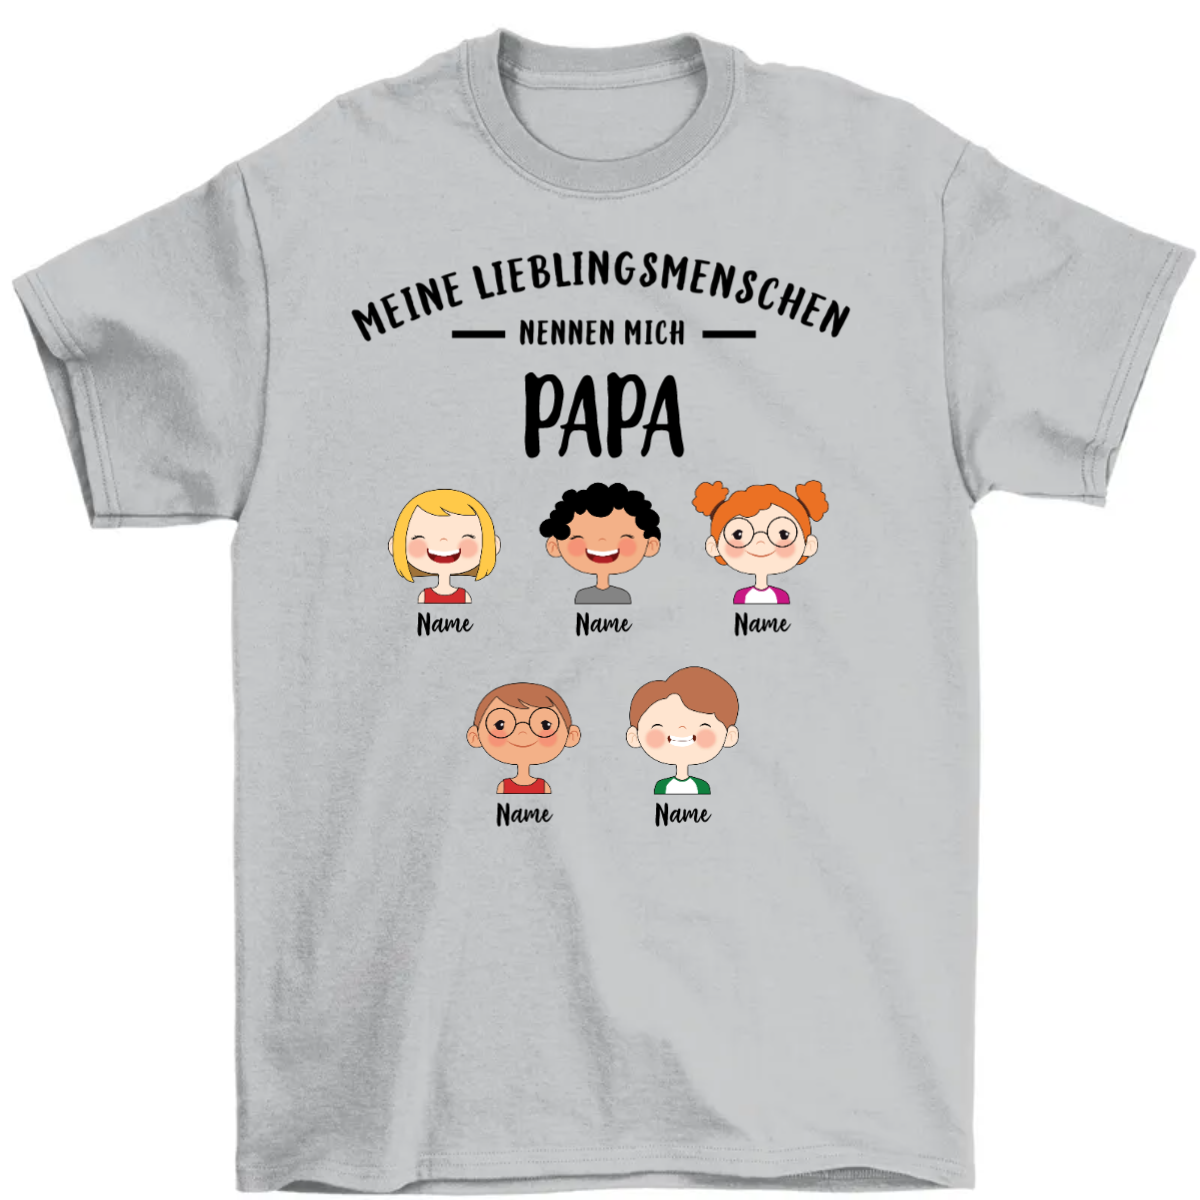 Meine Lieblingsmenschen nennen mich Papa Opa süßes Kind Personalisiertes Shirt